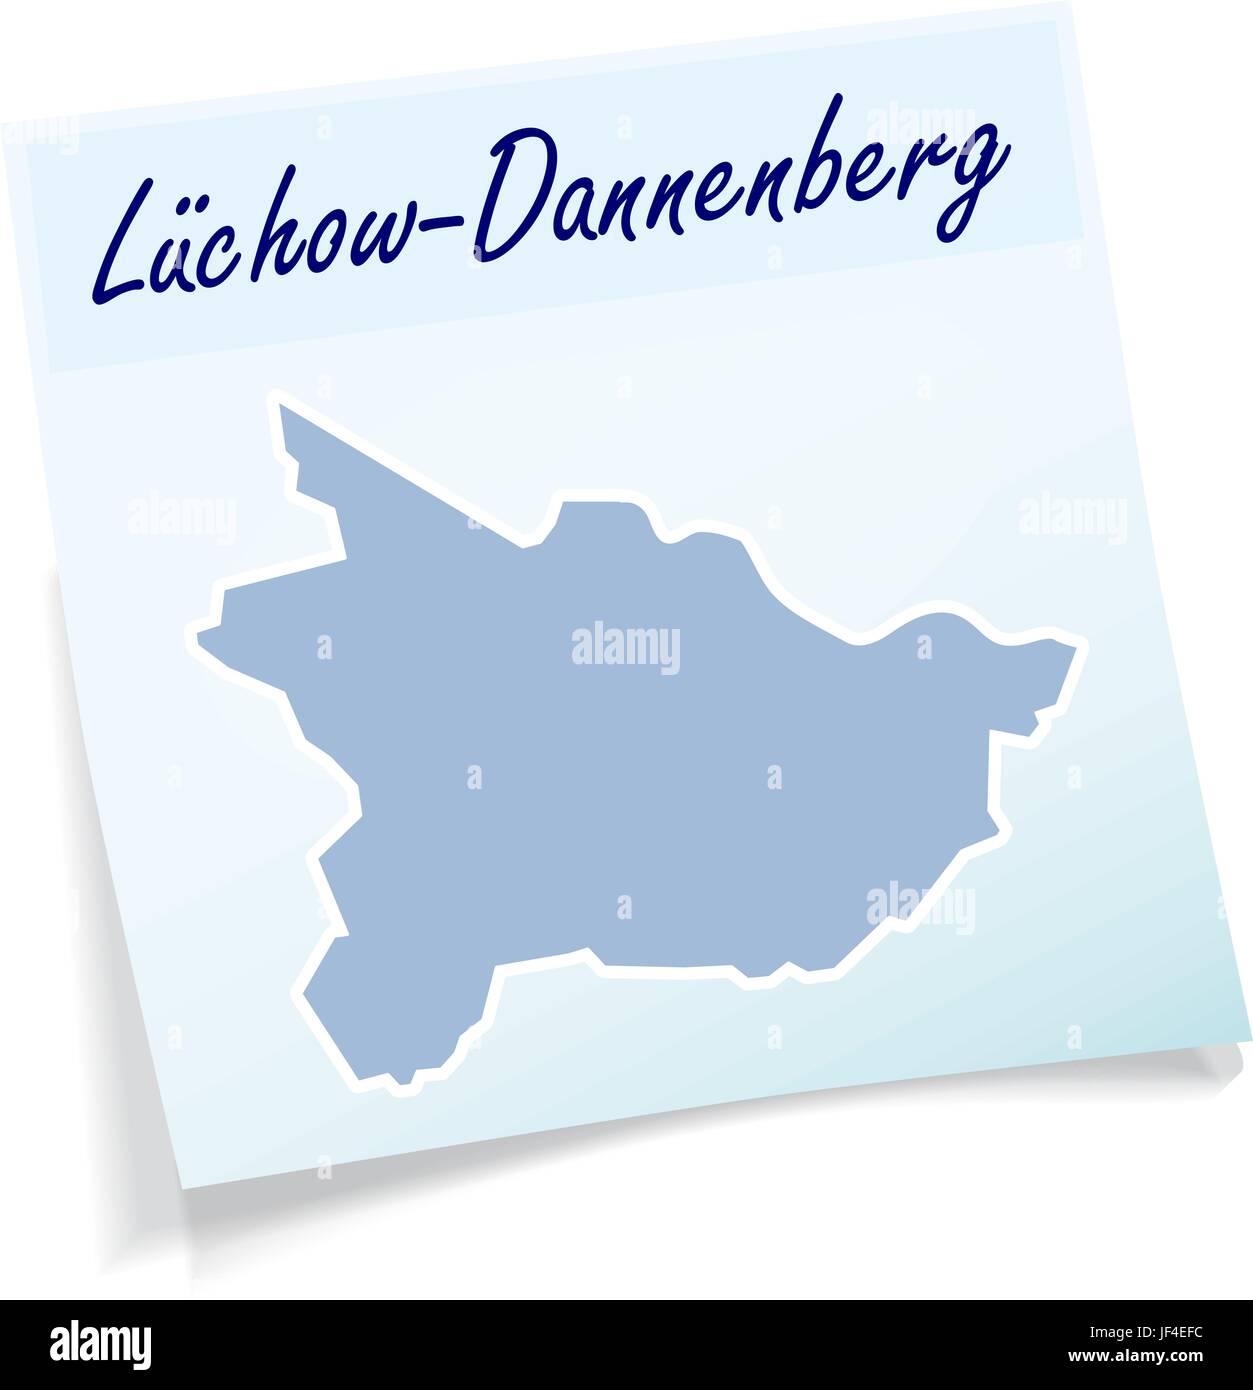 luechow-dannenberg as notepad Stock Vector